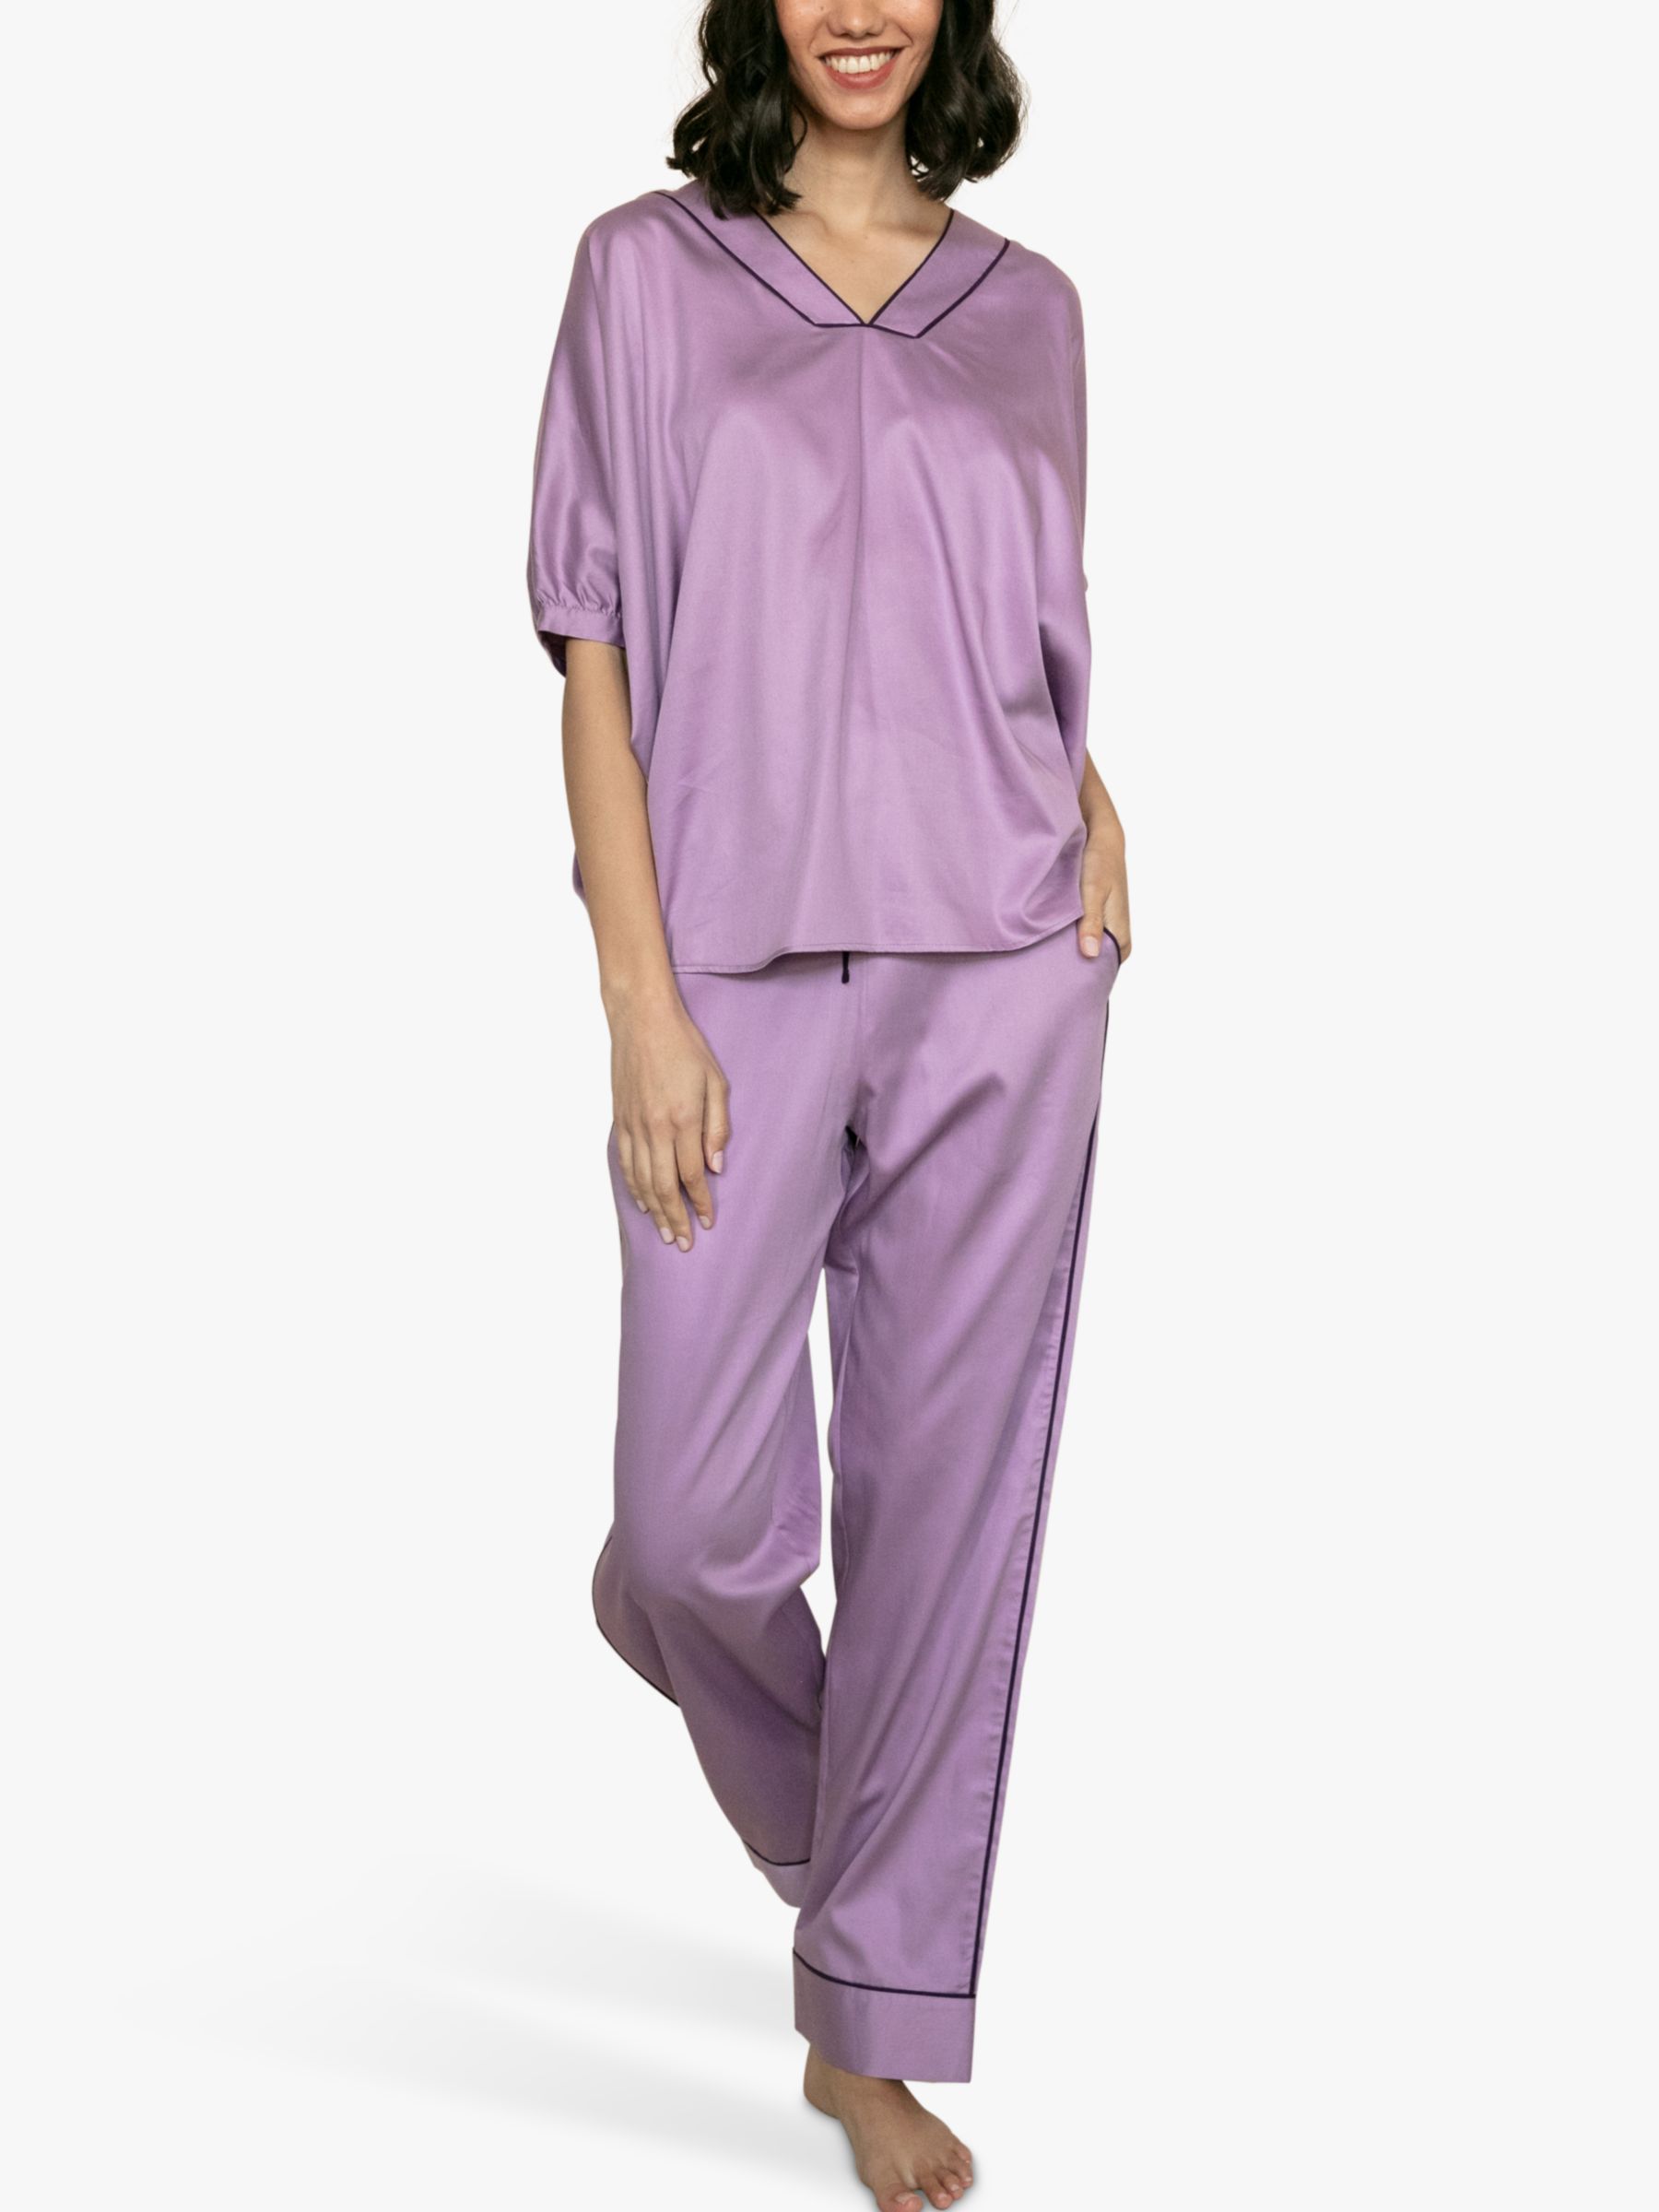 Fable & Eve Silky Pyjama Set, Lilac at John Lewis & Partners